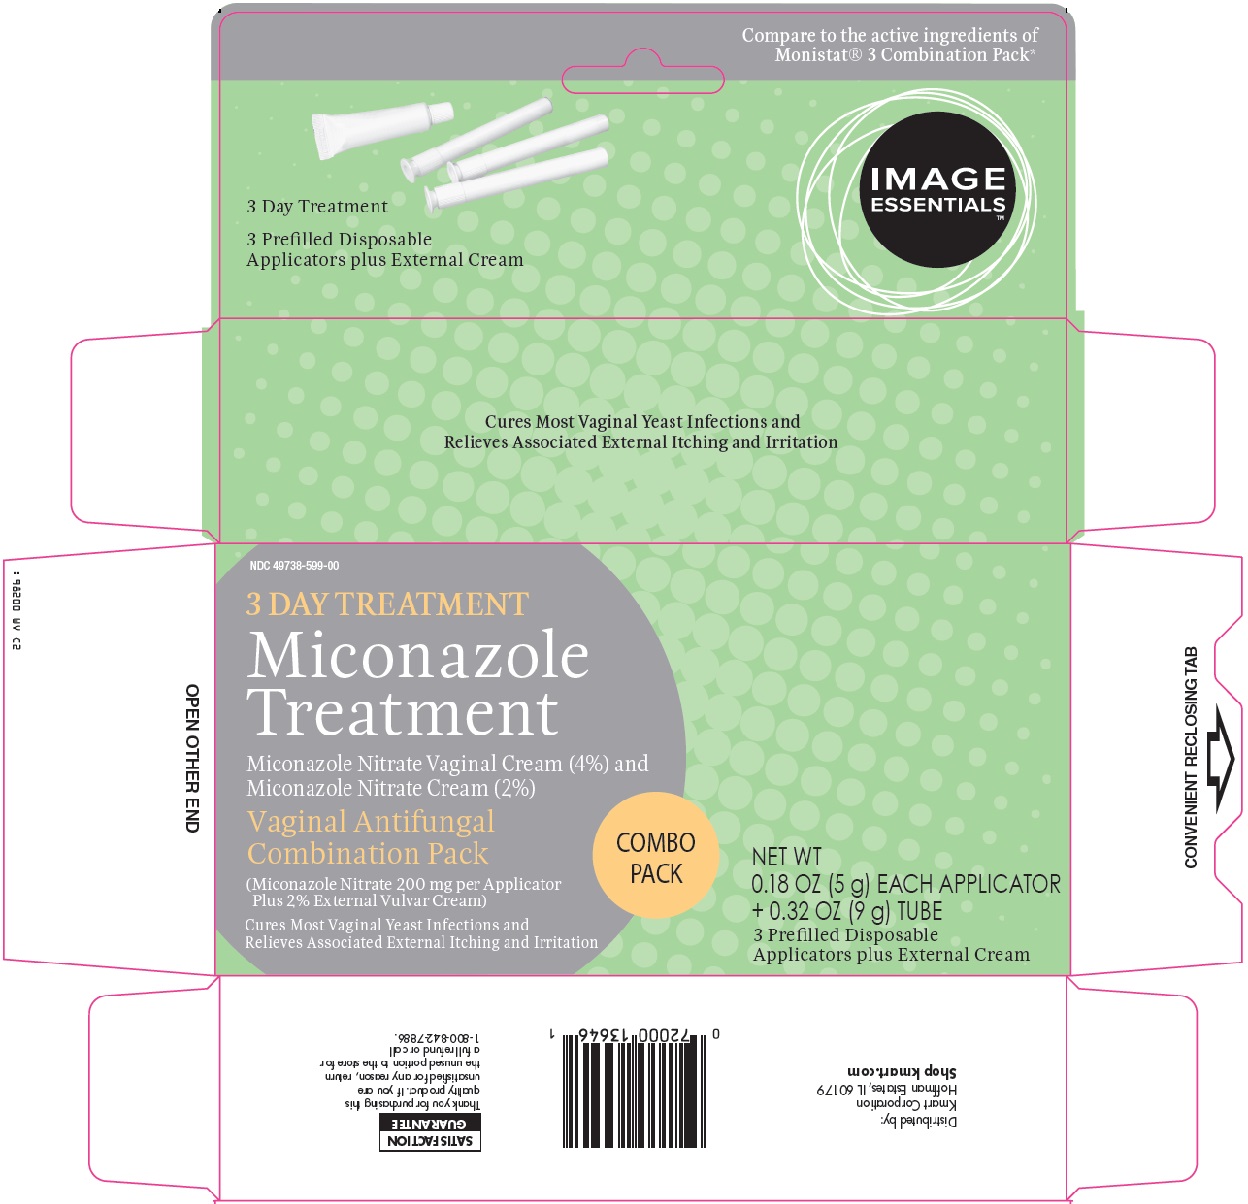 Image Essentials Miconazole Treatment Image 1